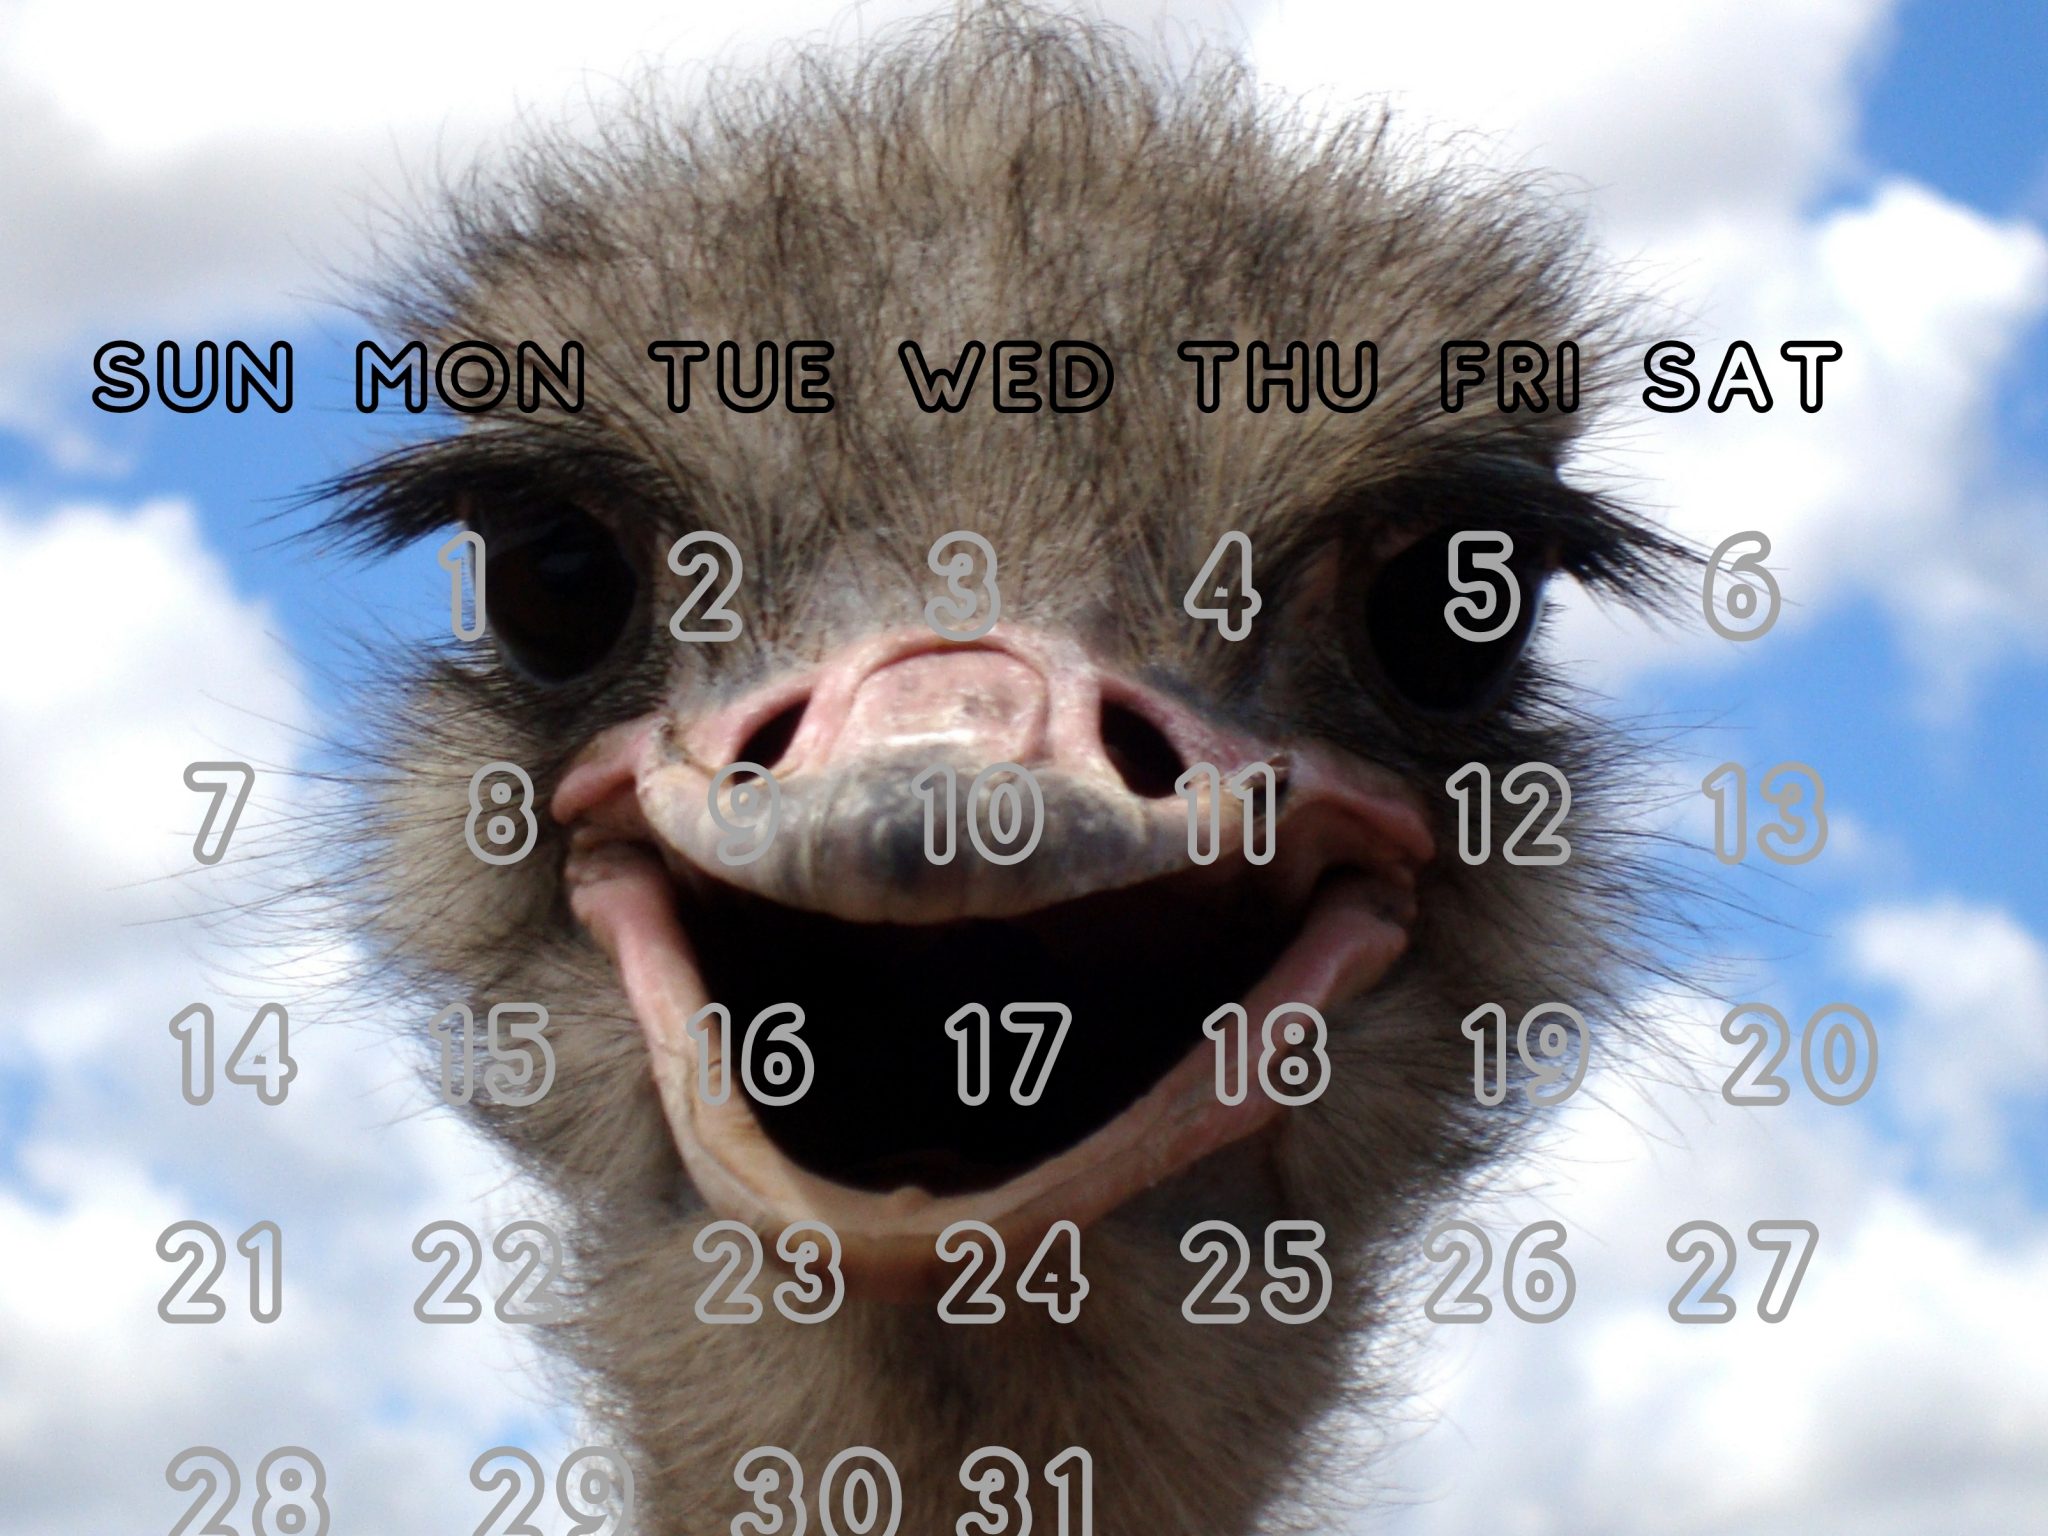 2048x1536 wallpaper March 2021 Ostrich Smiling iPad Wallpaper 2048x1536 pixels resolution